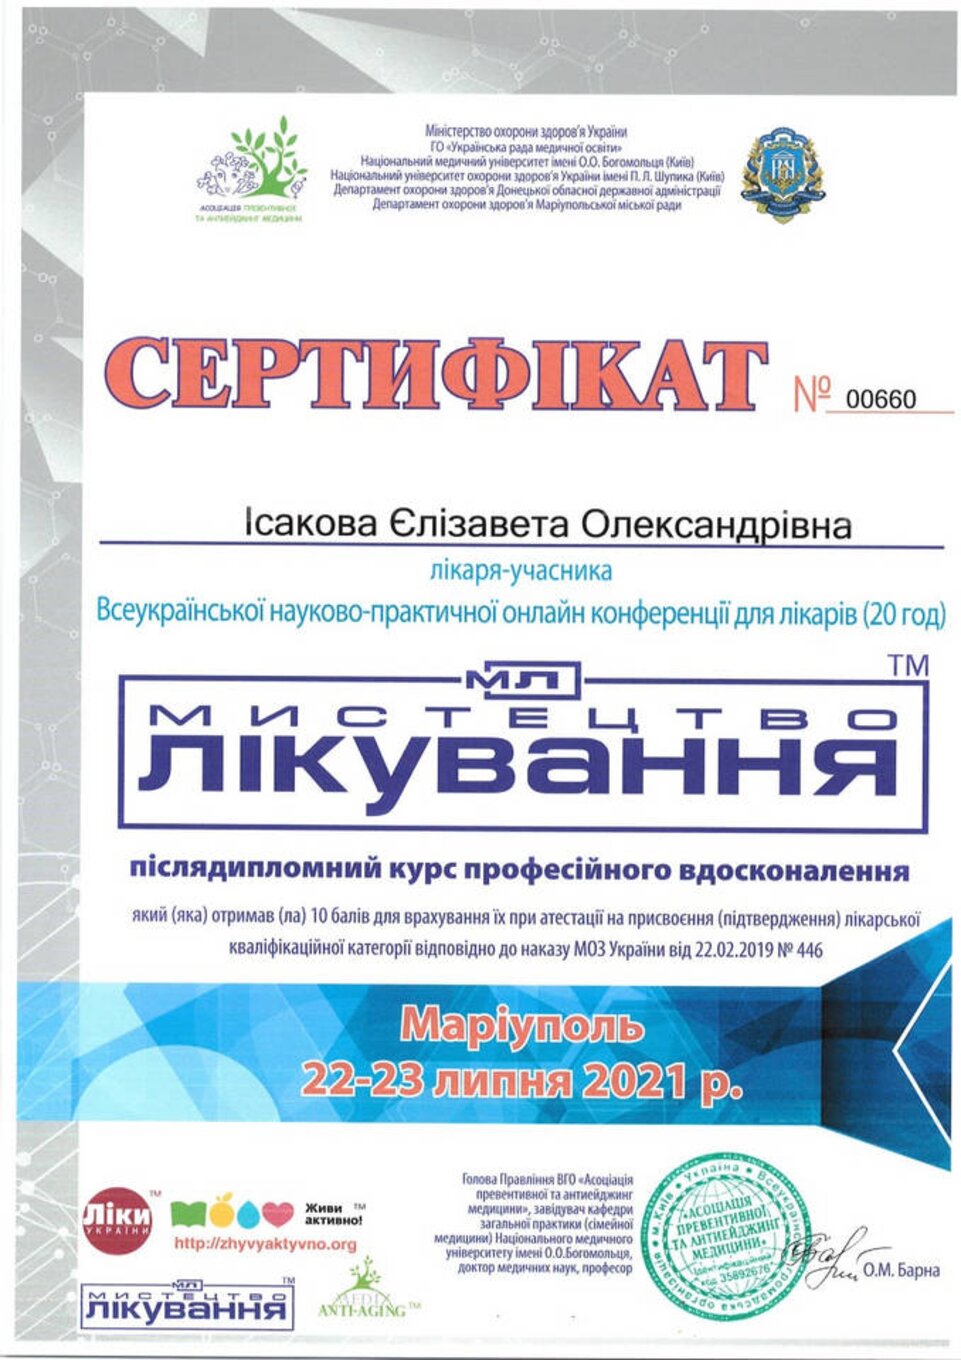 certificates/isakova-yelizaveta-oleksandrivna/erc-isakova-cert-01.jpg